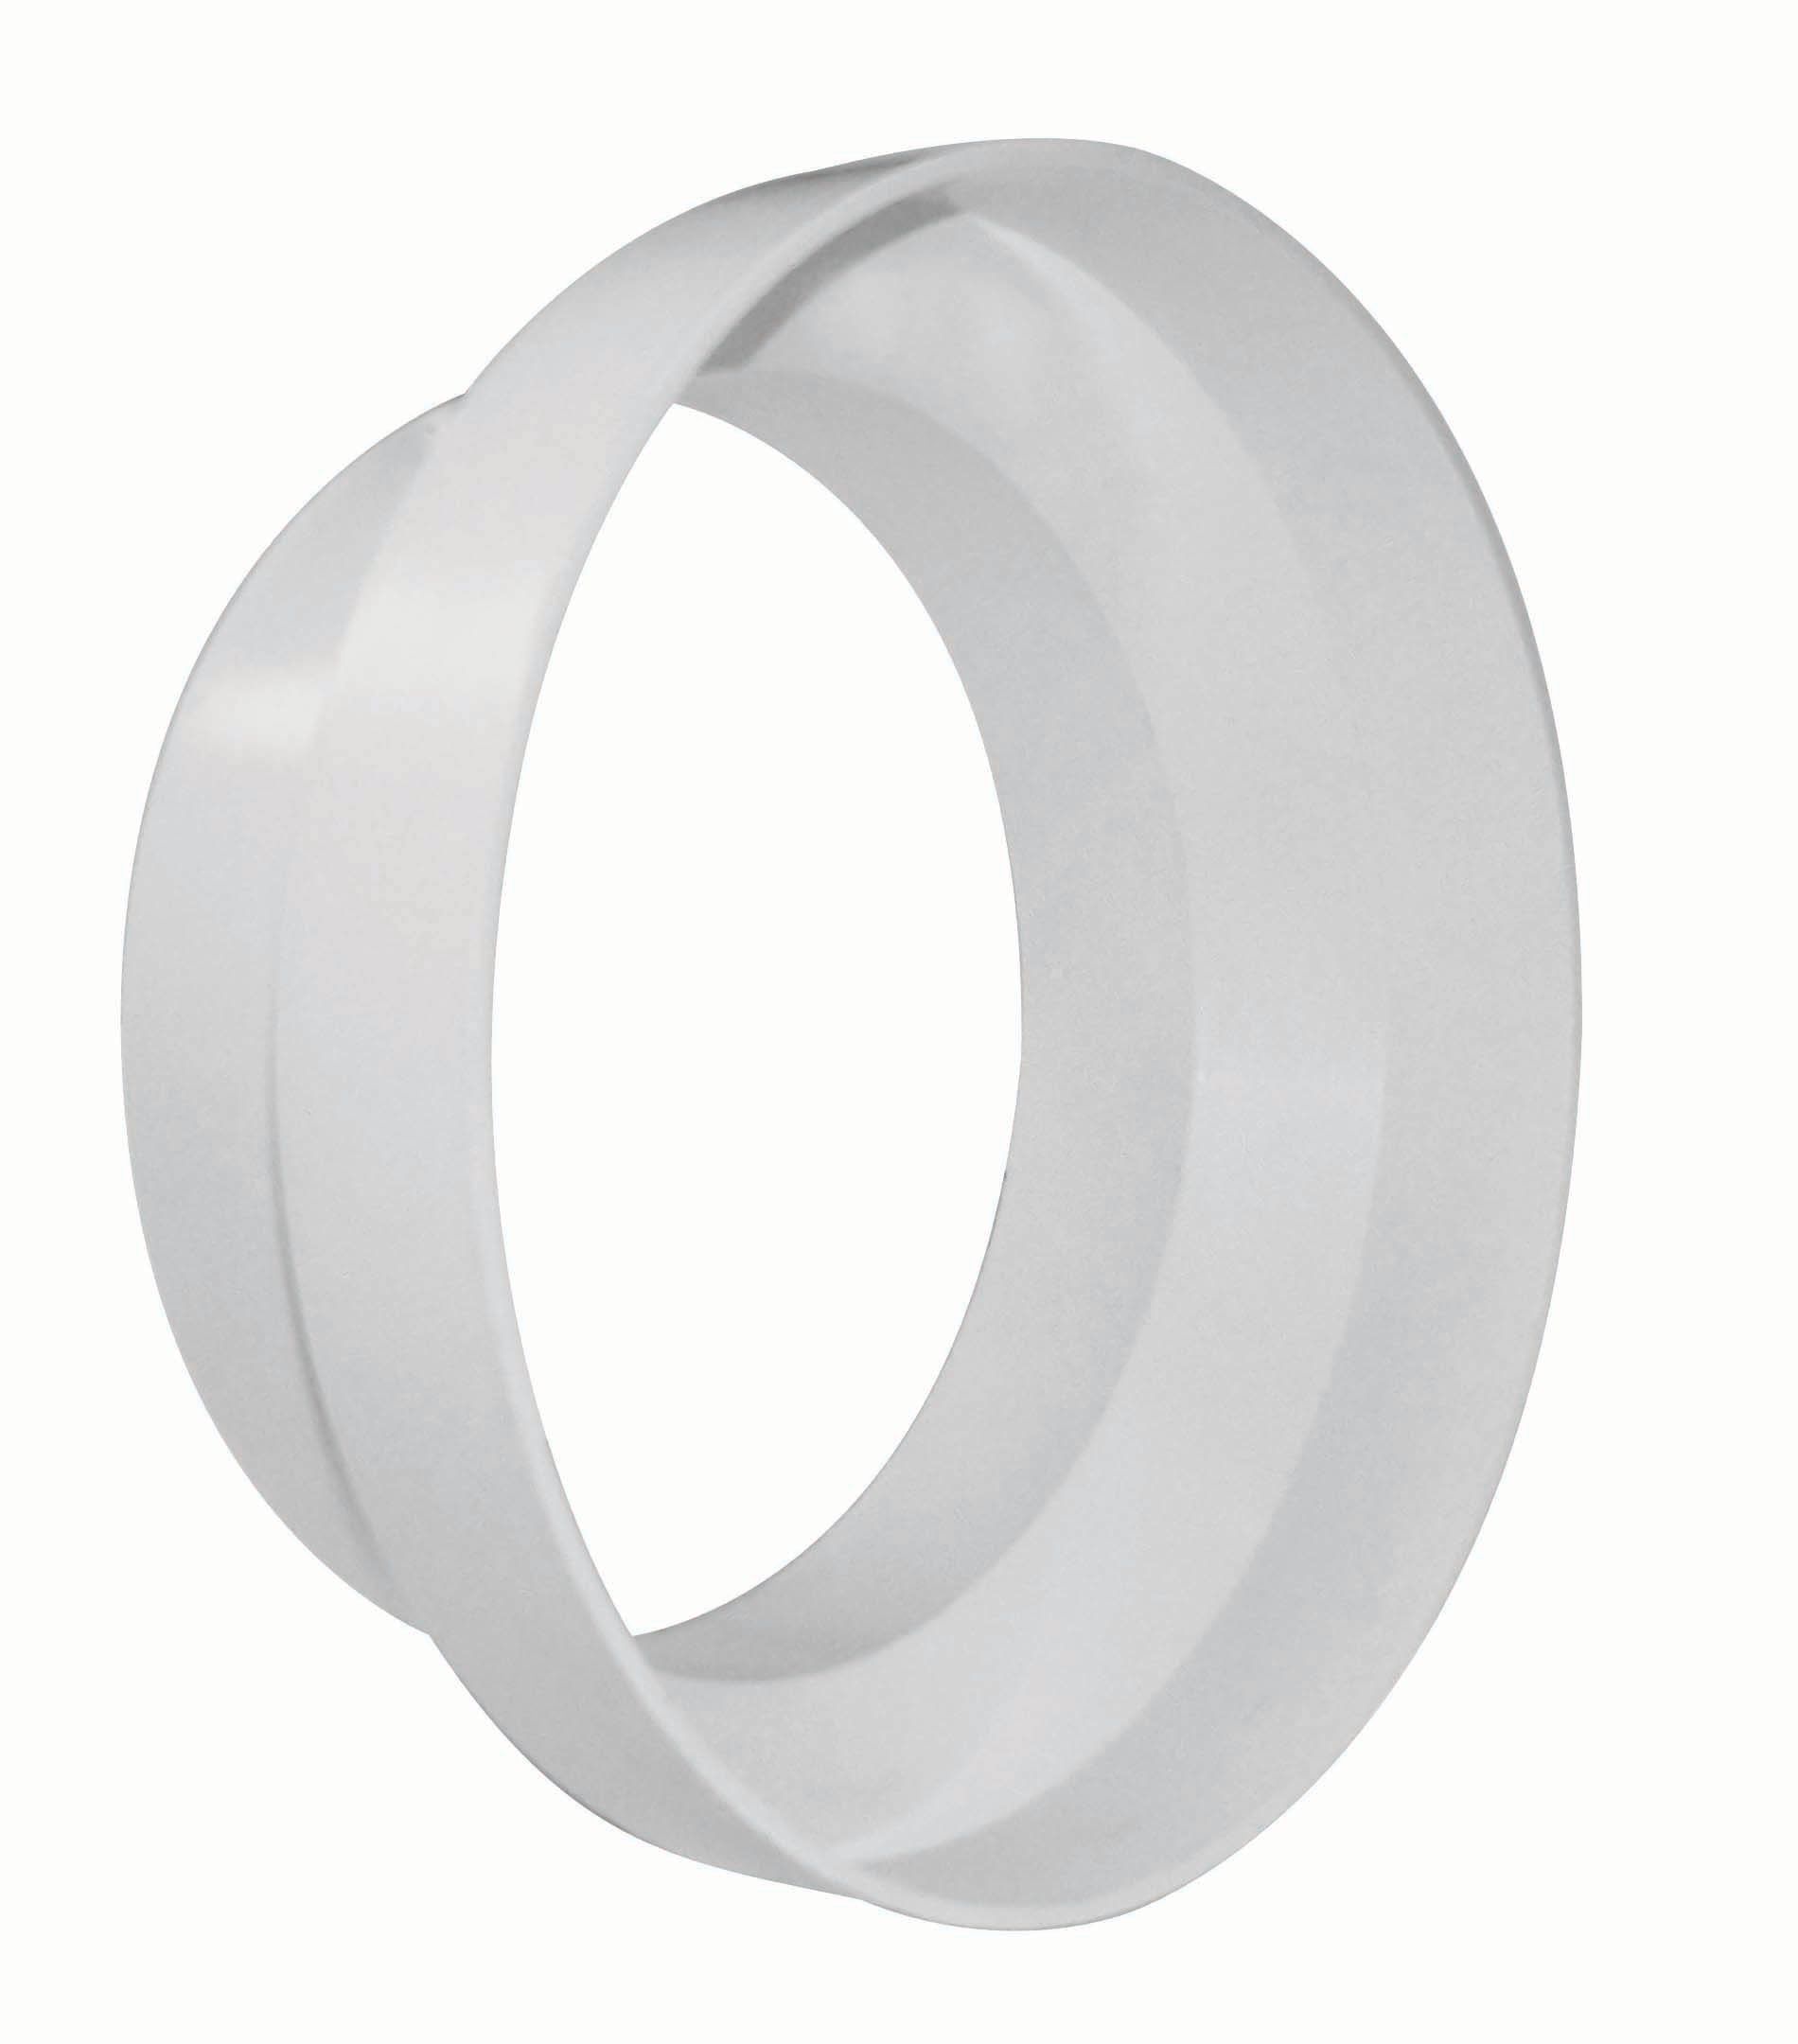 Manrose PVC White Round Ducting Reducer - 125-100mm